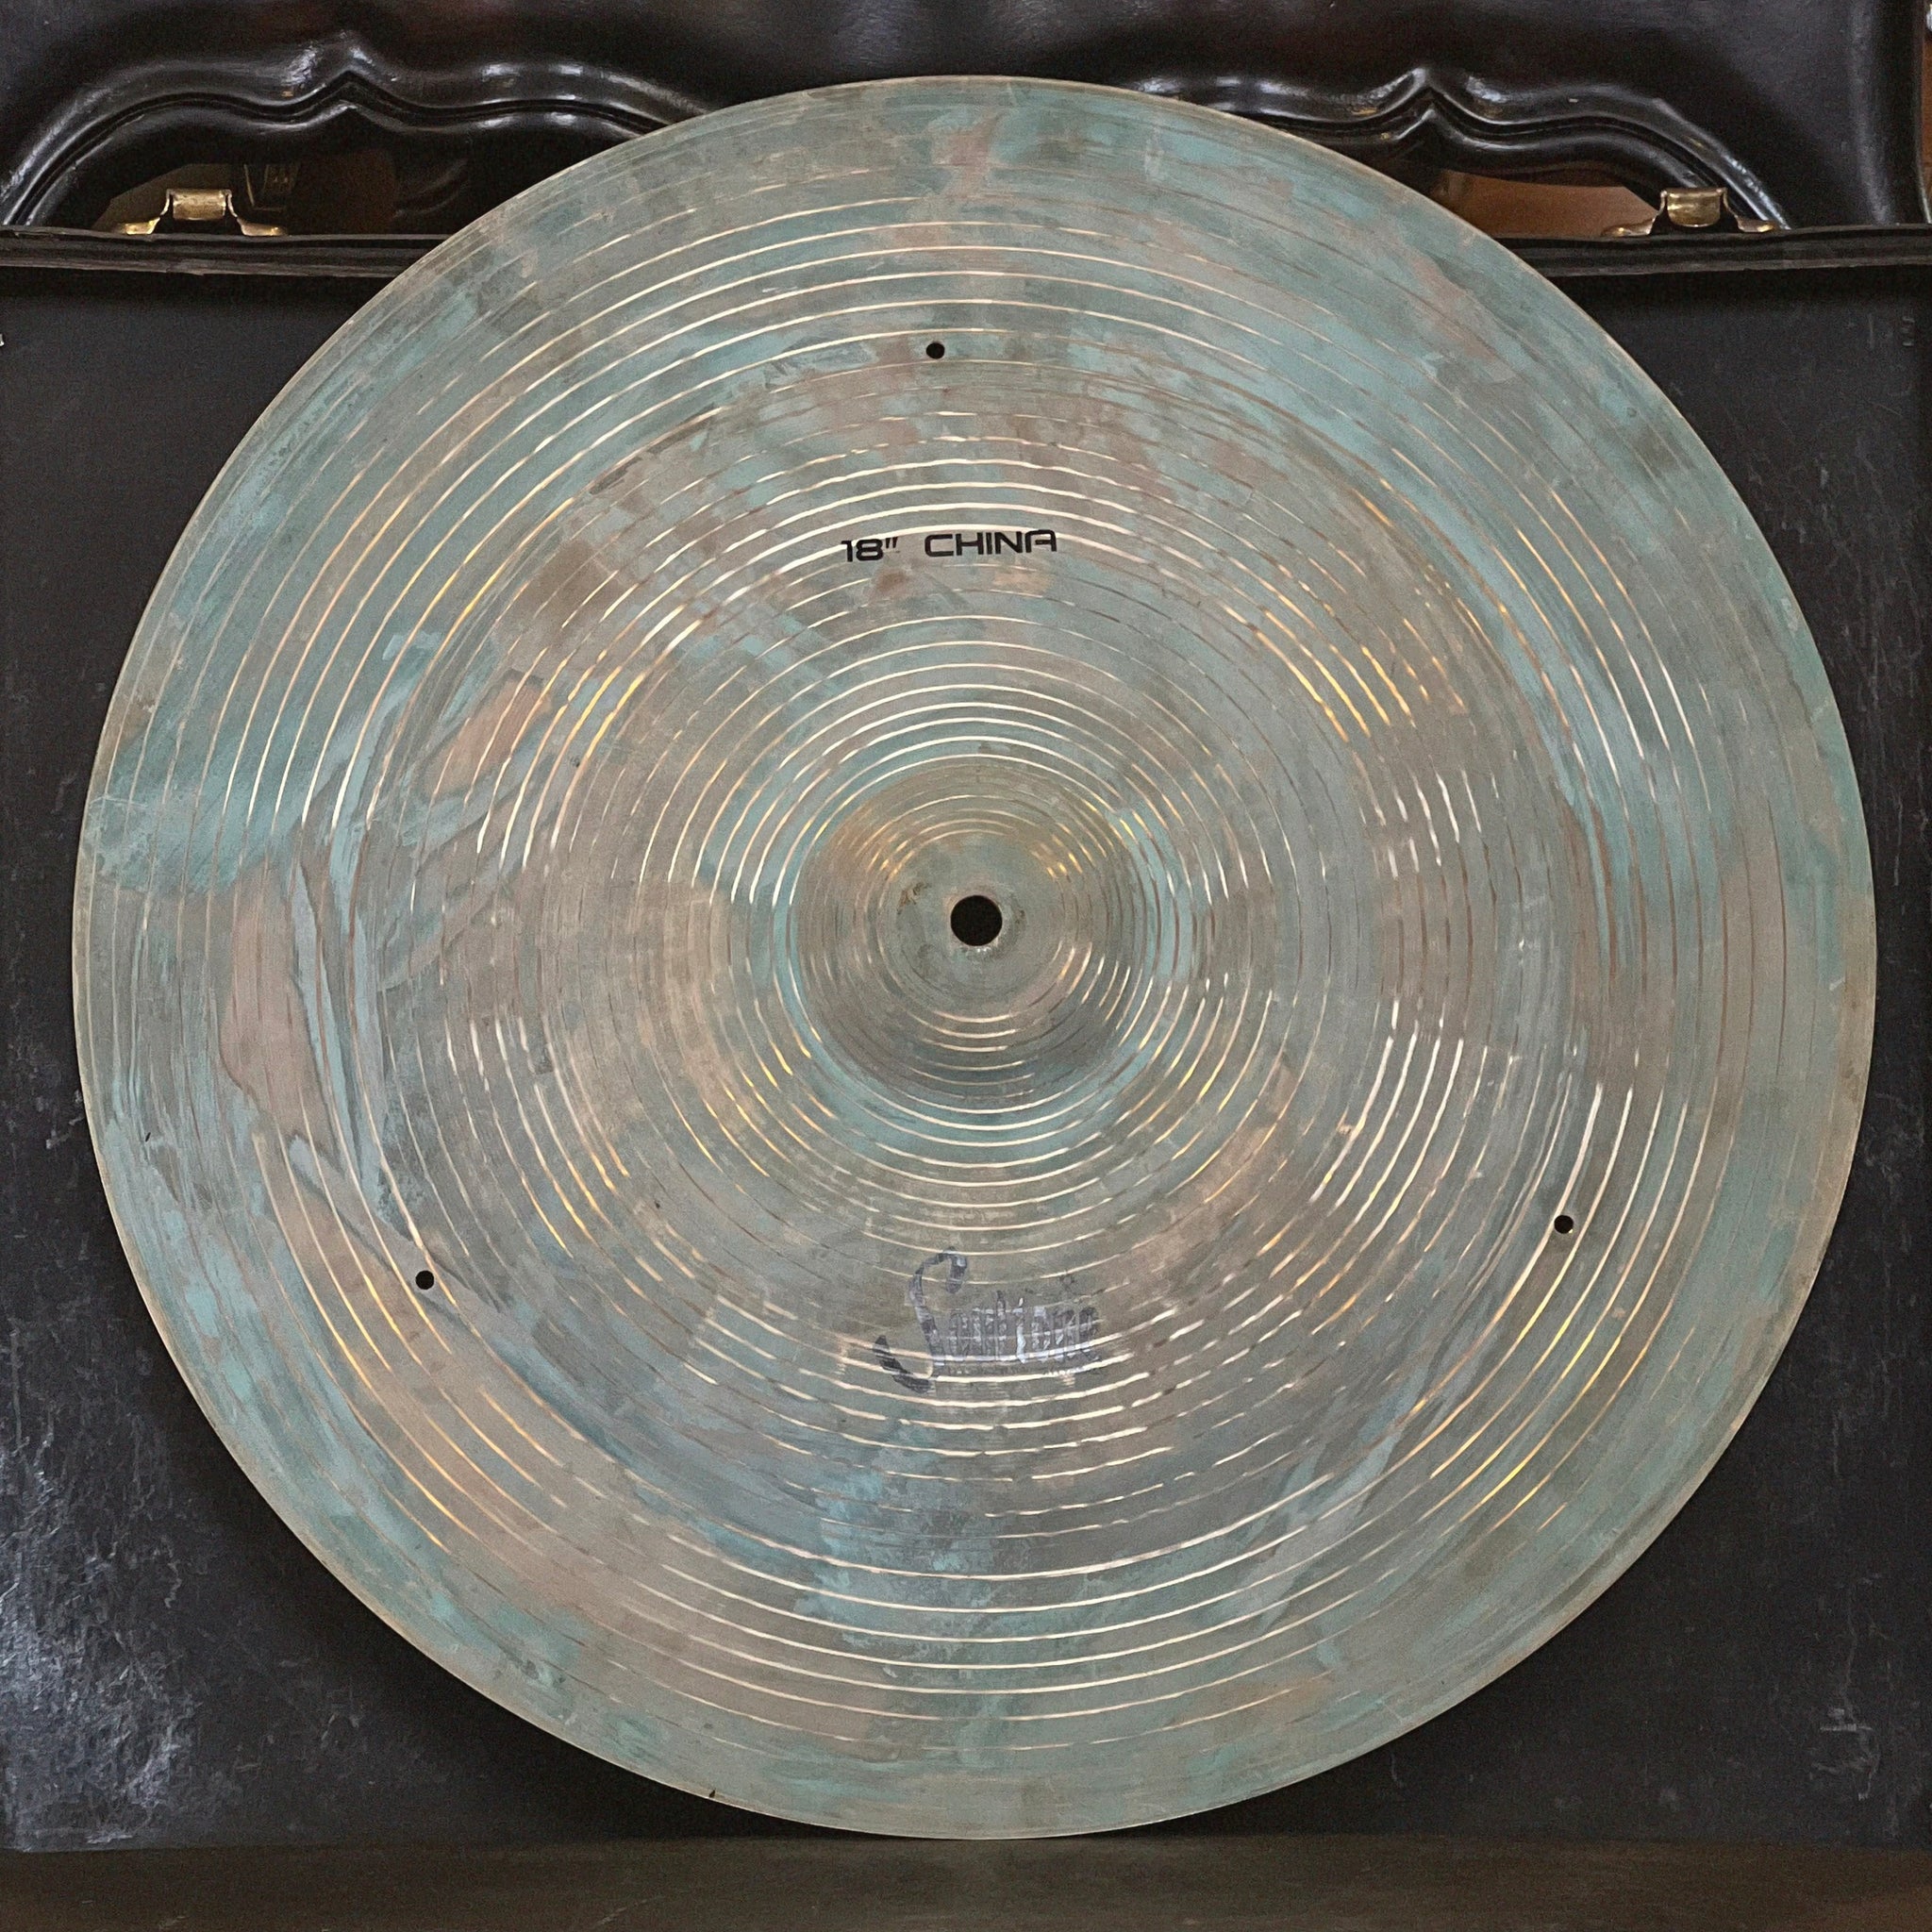 USED Soultone 18" Old School Patina China Cymbal w/ Three Rivet Holes - 1664g